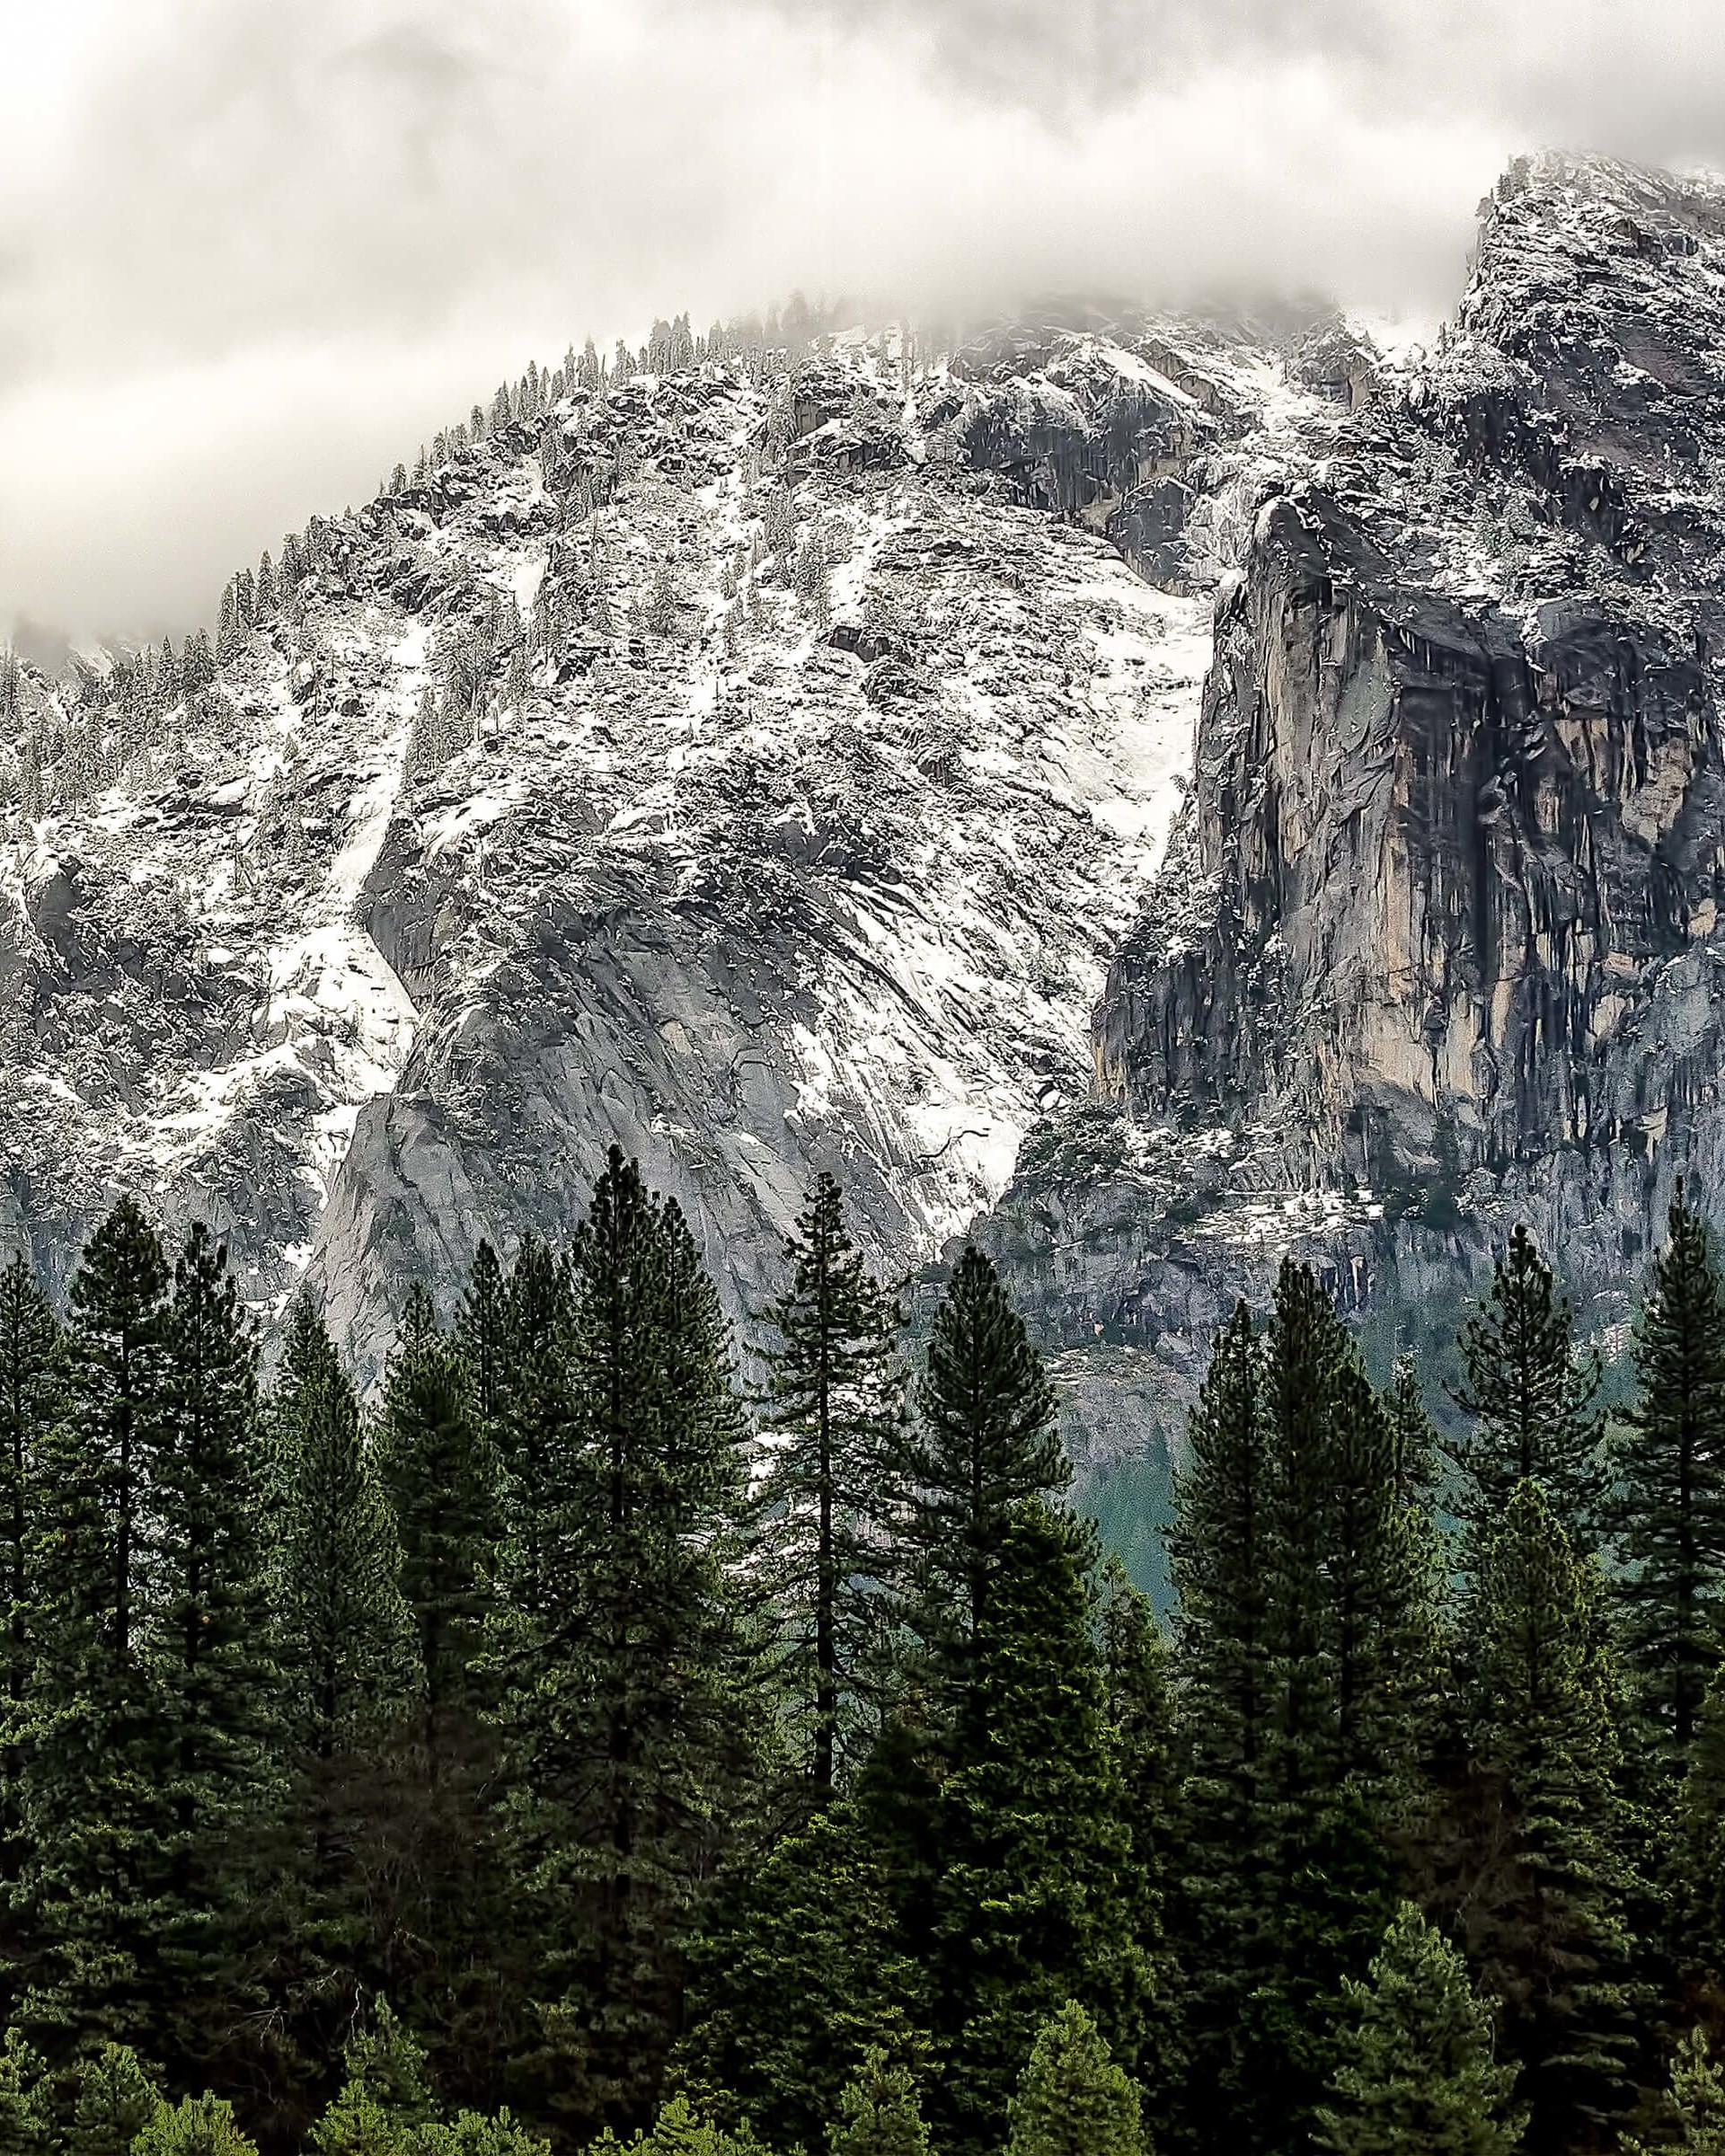 Winter Day at Yosemite National Park Wallpaper for Google Nexus 7